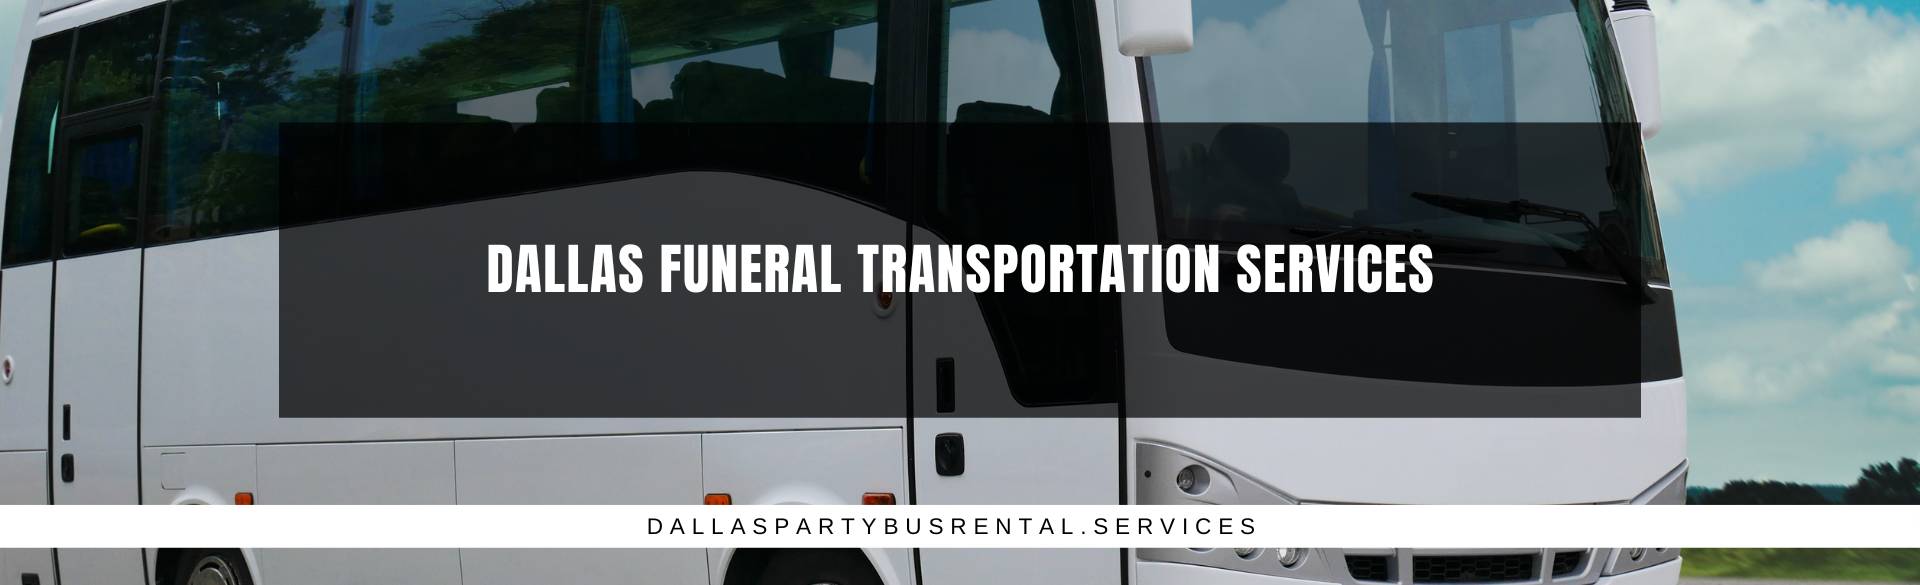 Dallas Funeral Transportation Services